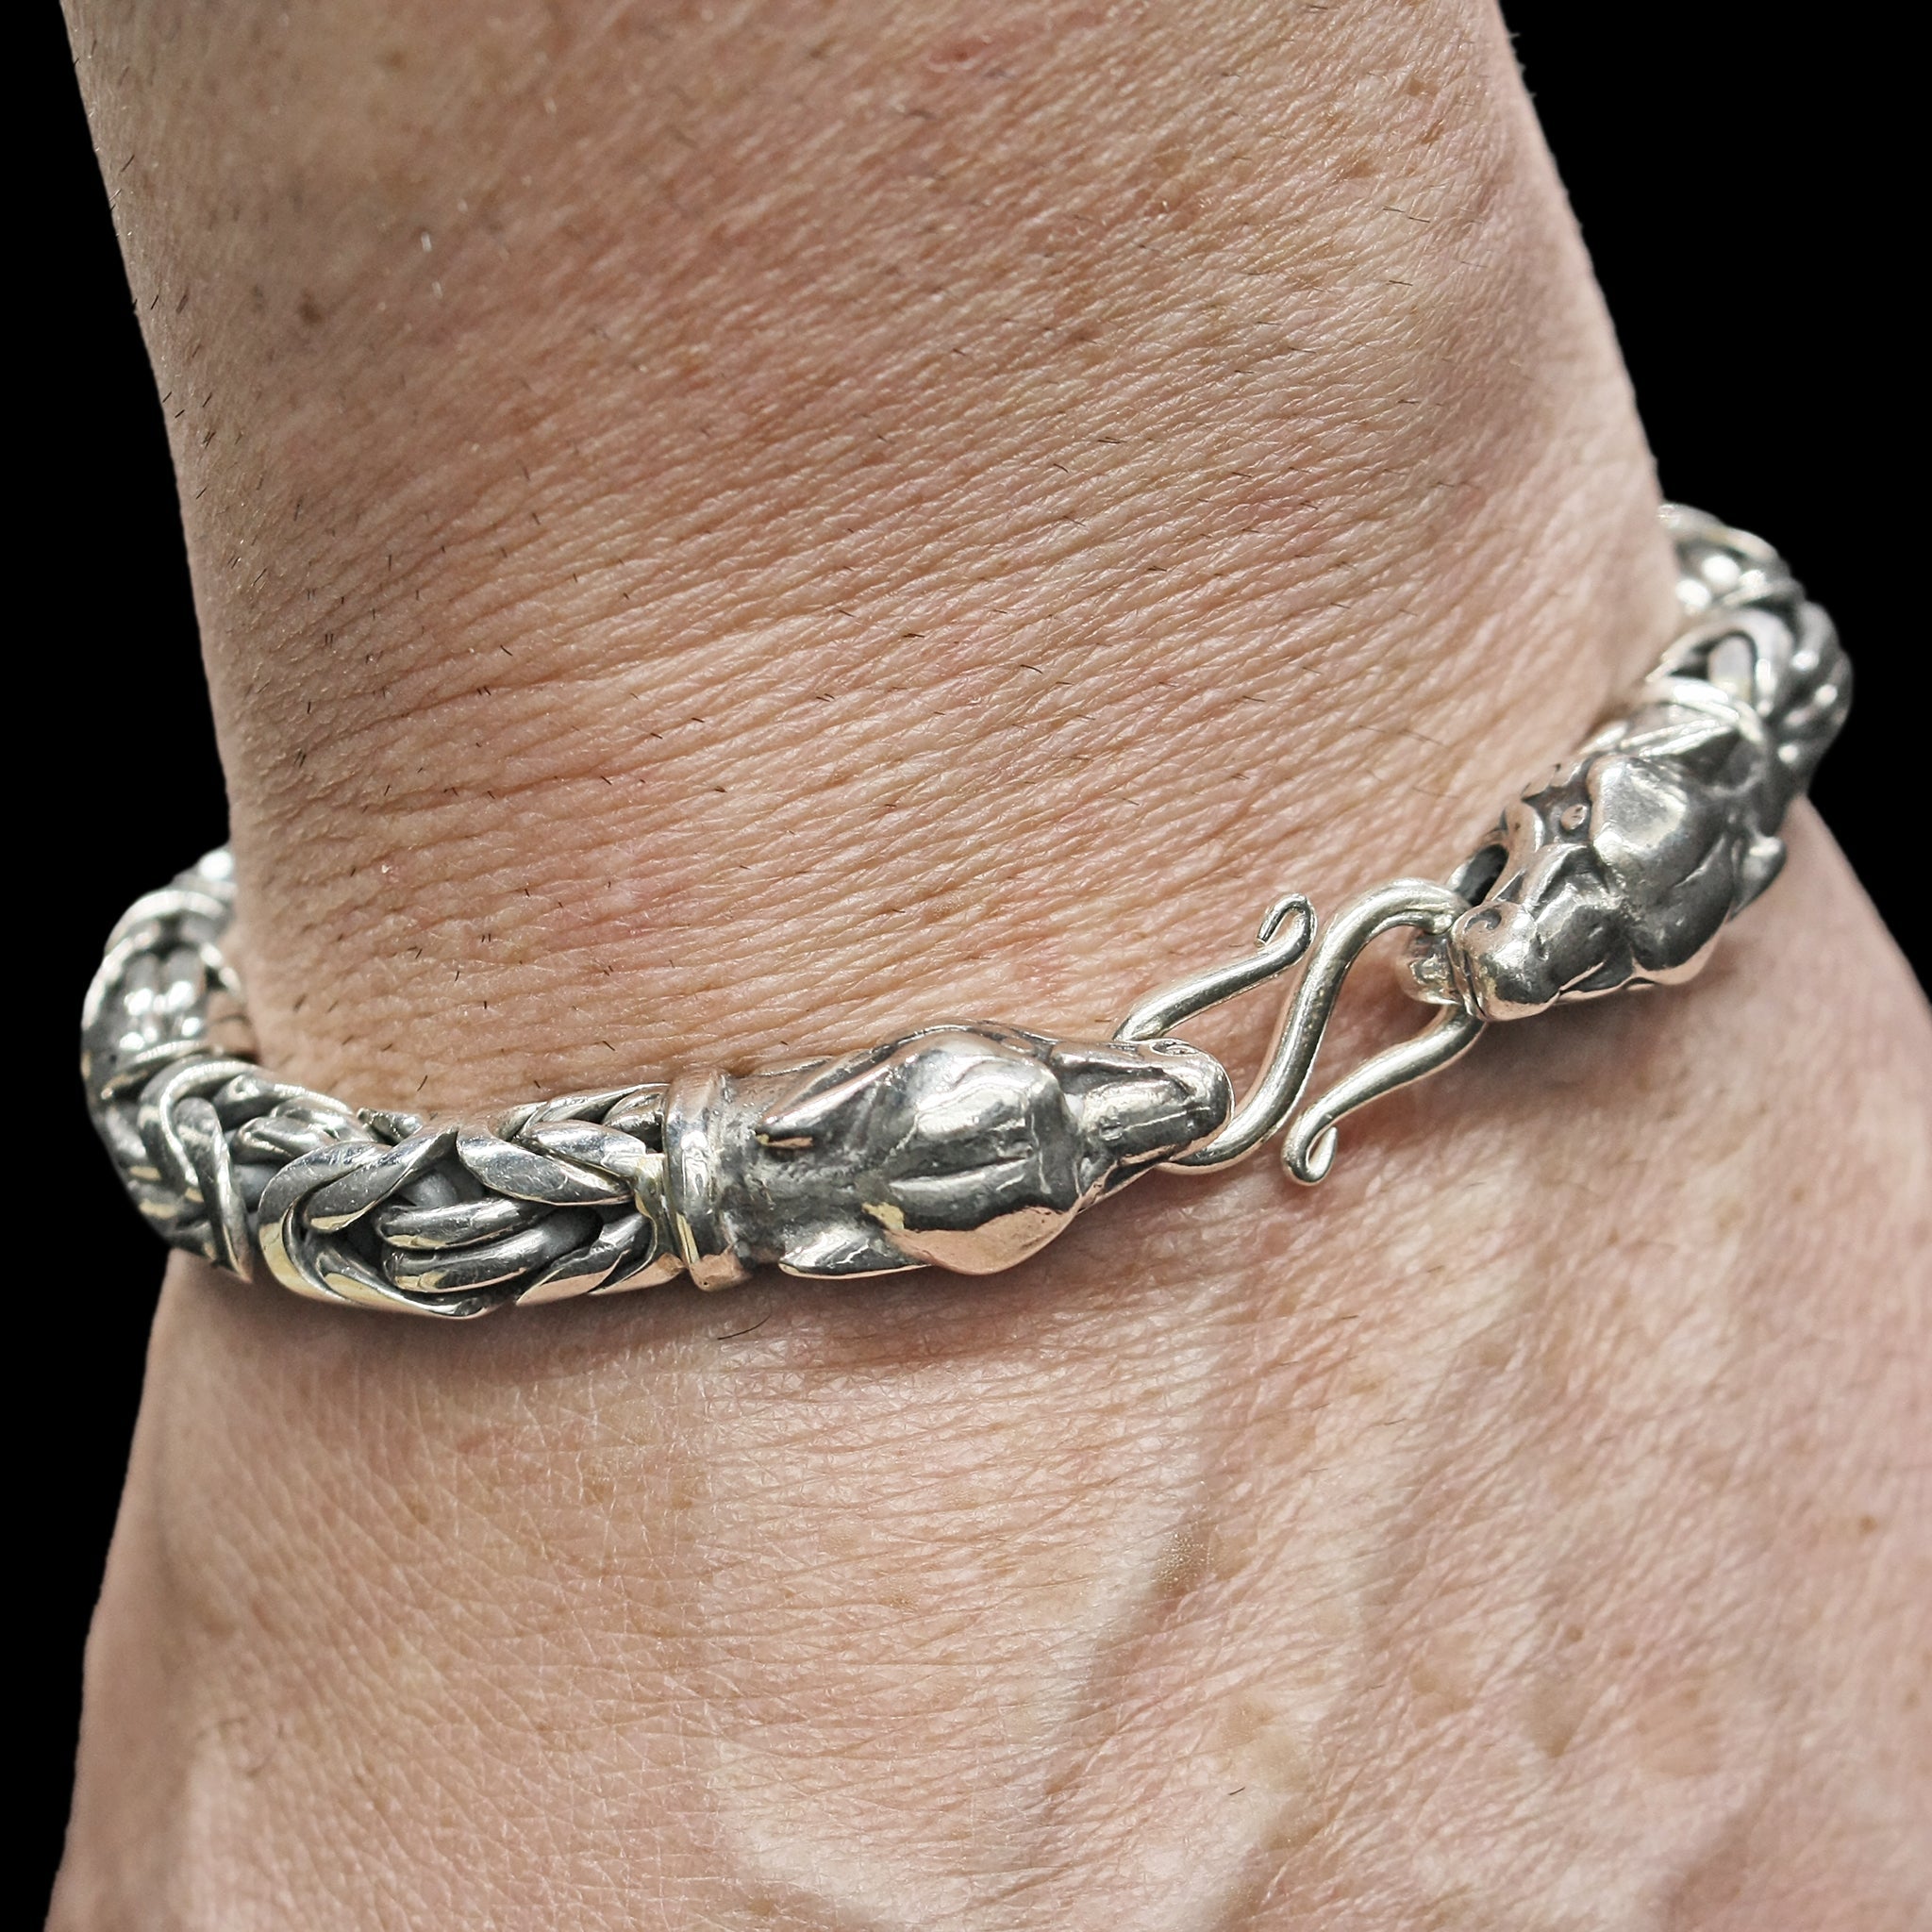 8mm Silver Viking King Bracelet With Ferocious Wolf Heads On Wrist